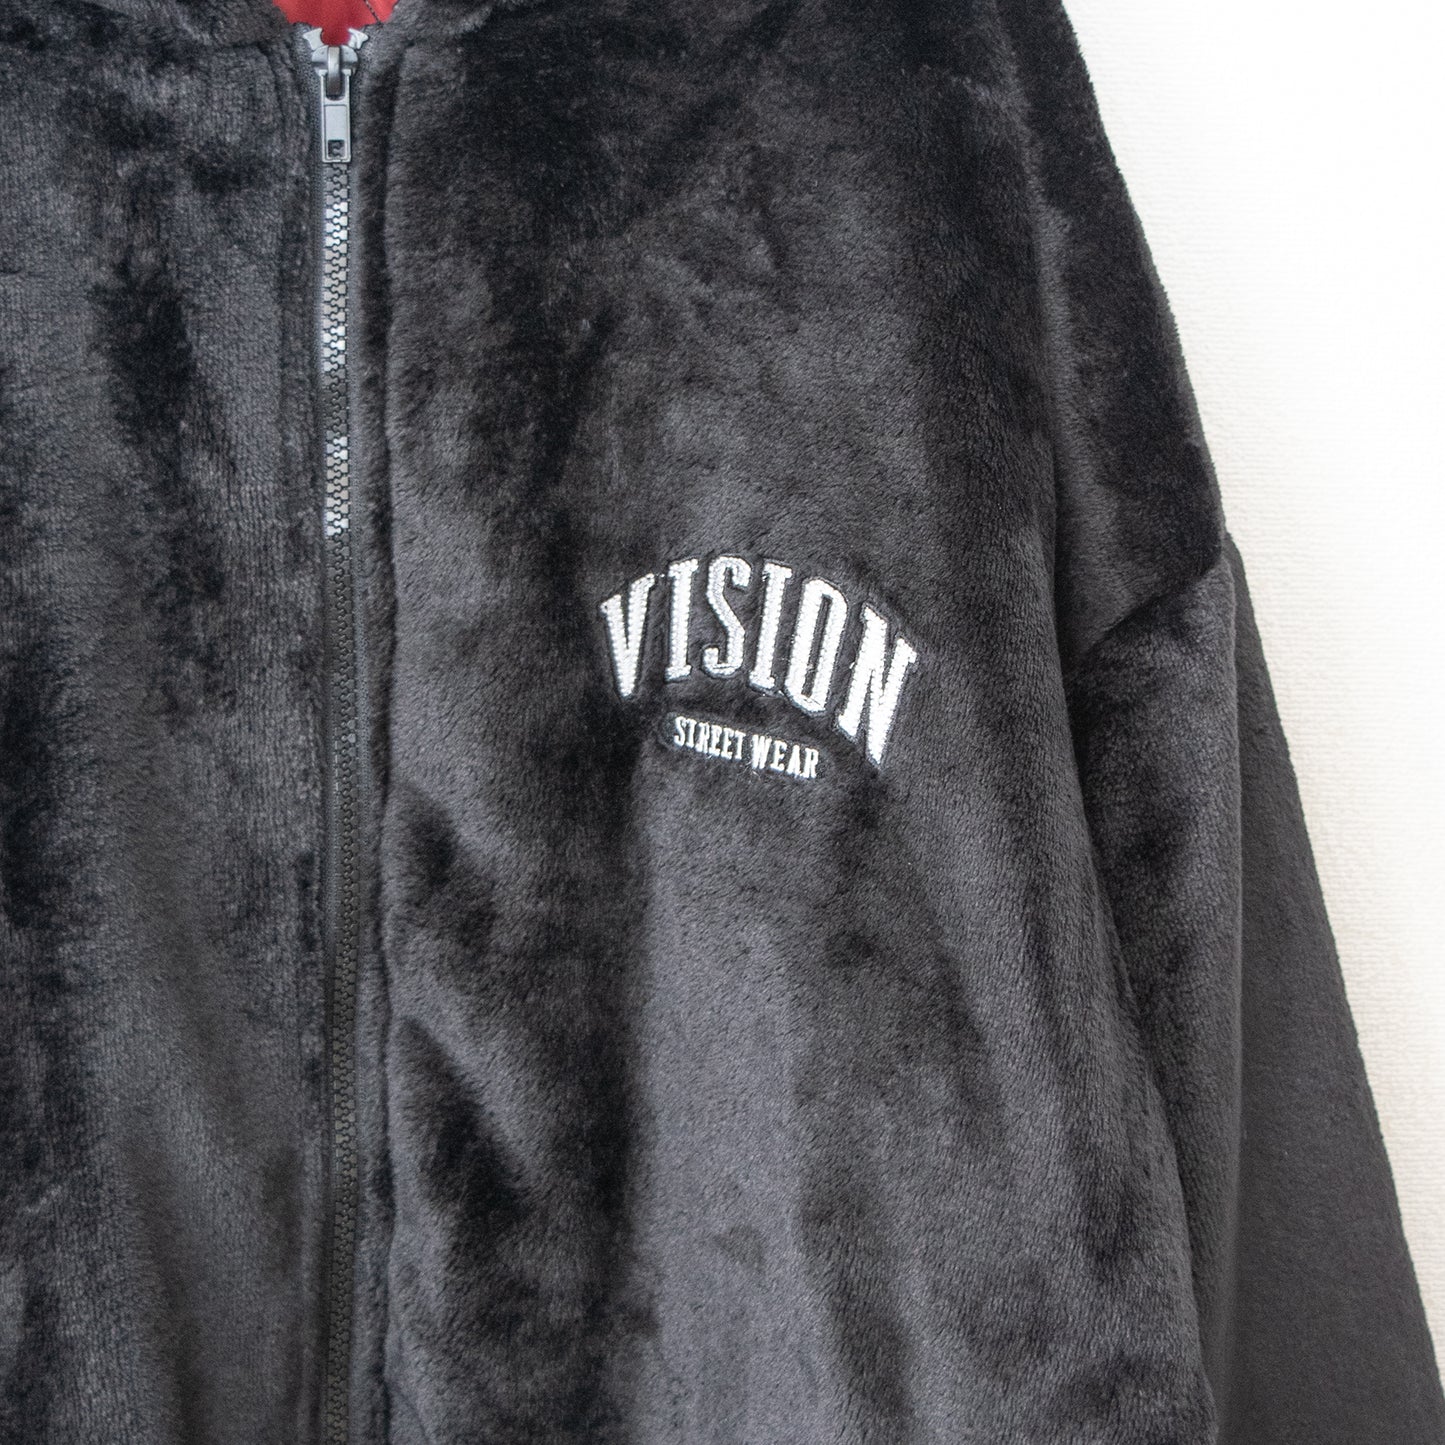 VISION STREET WEAR Patch Faux Fur Blouson Jacket - YOUAREMYPOISON